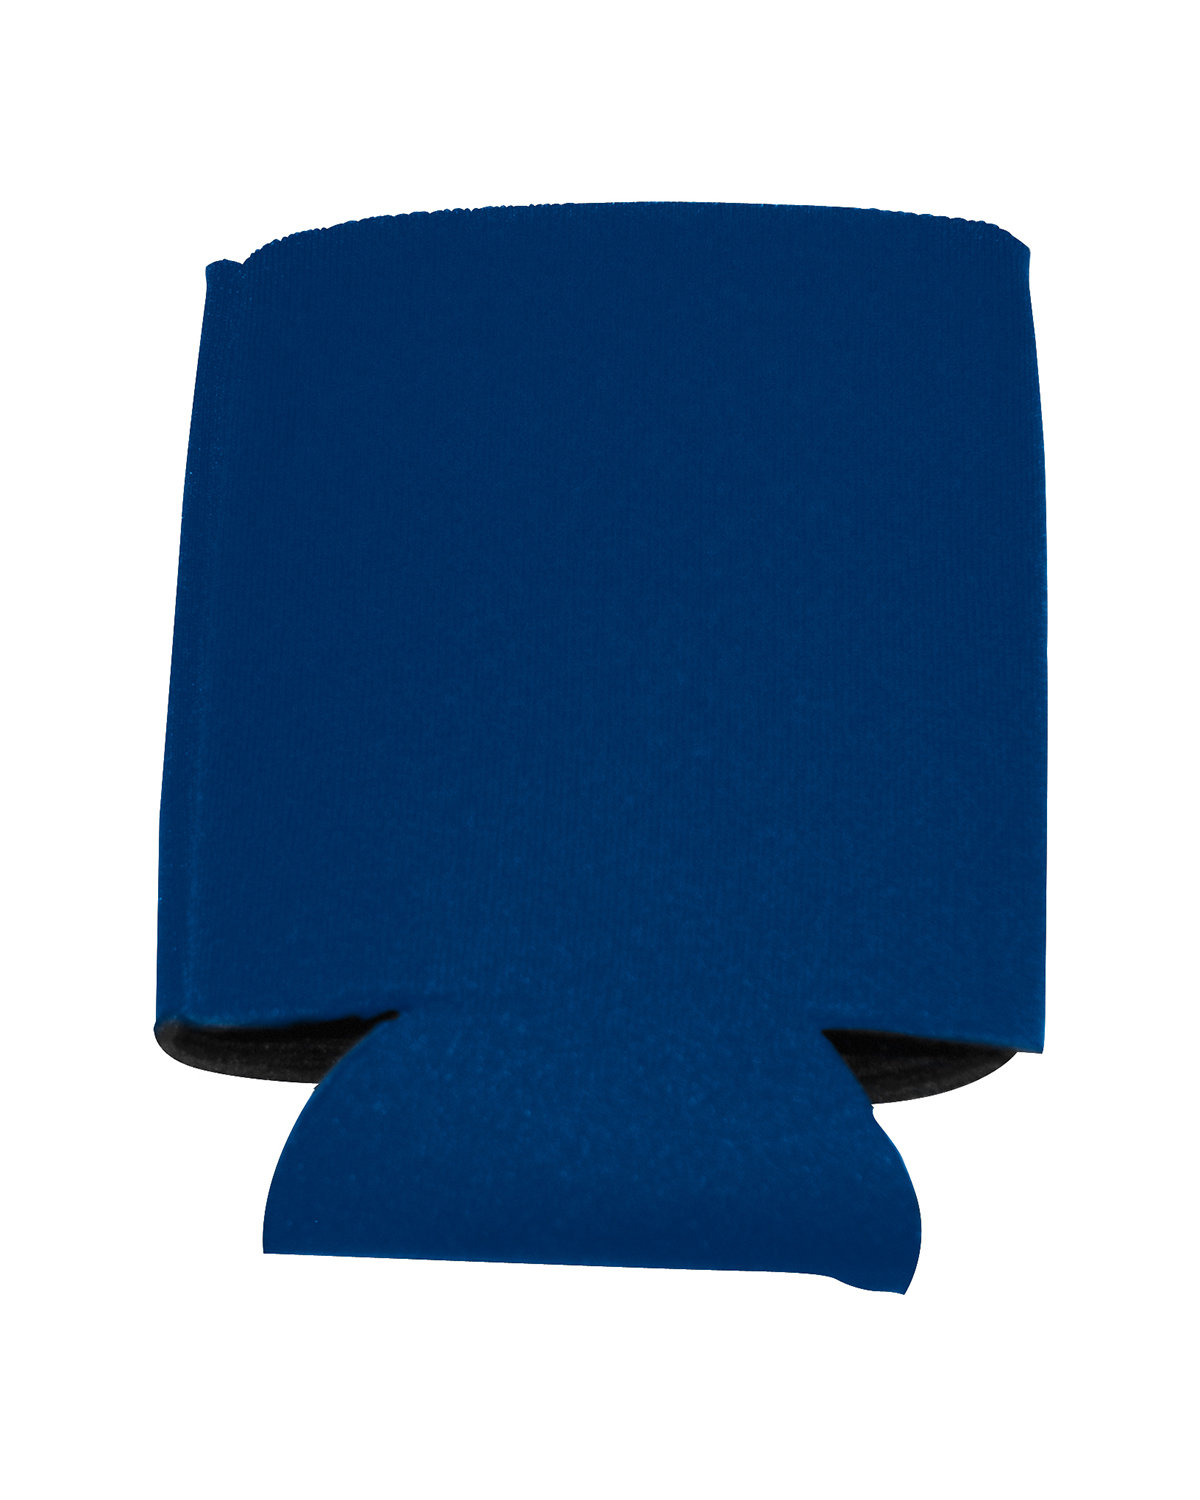 Prime Line Folding Can Cooler Sleeve navy blue 